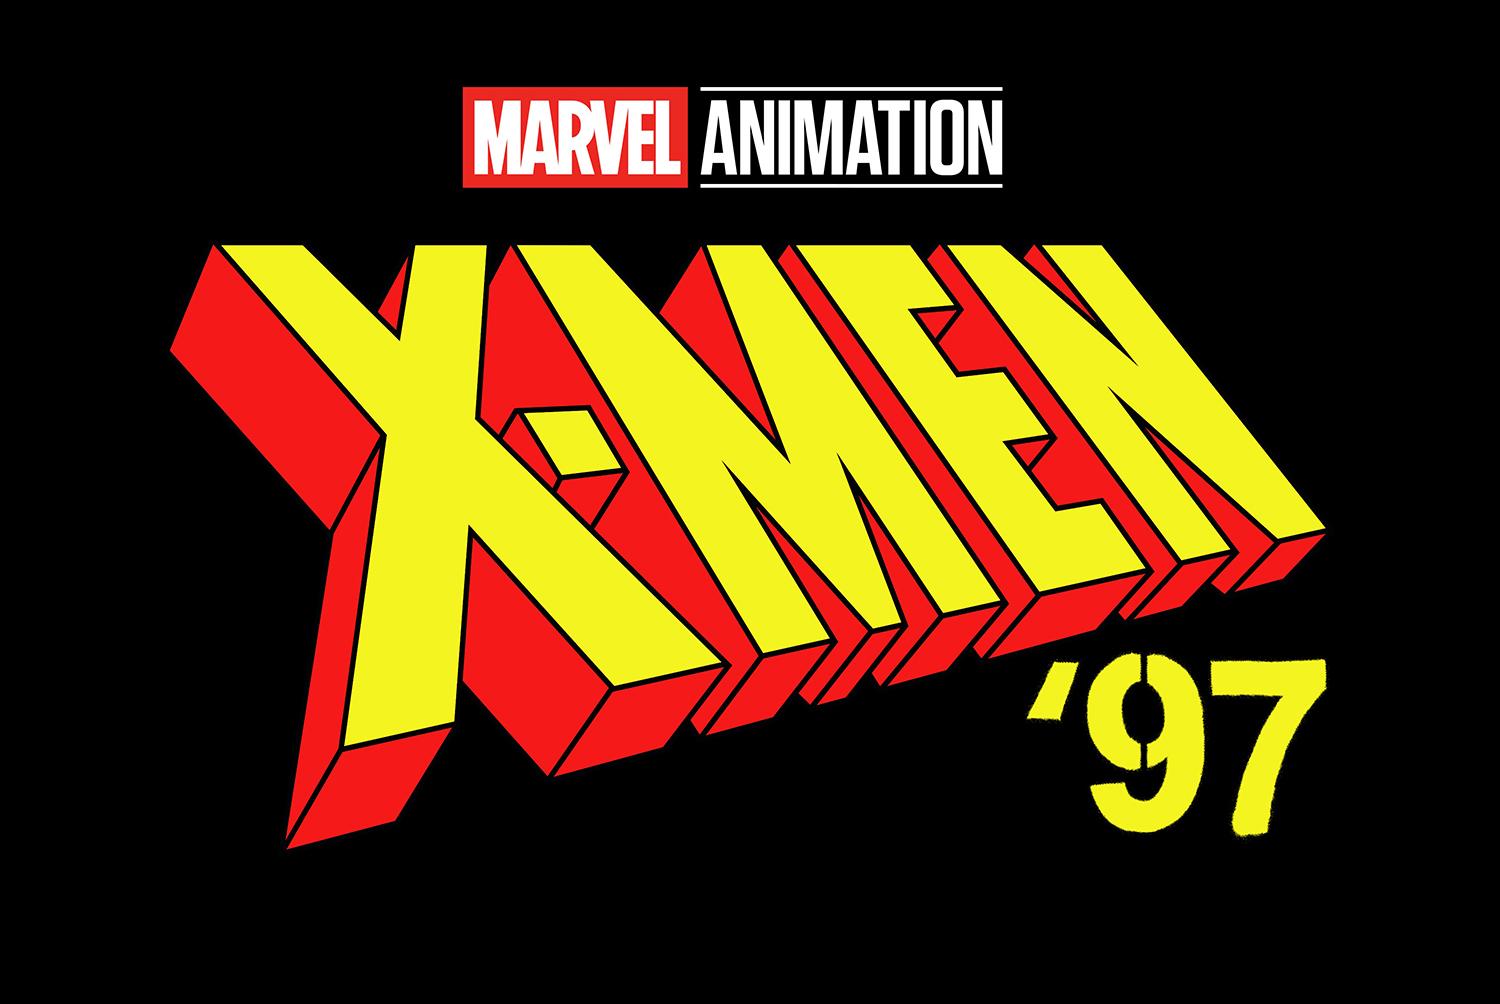 Marvelanimation xmen97 logo title card